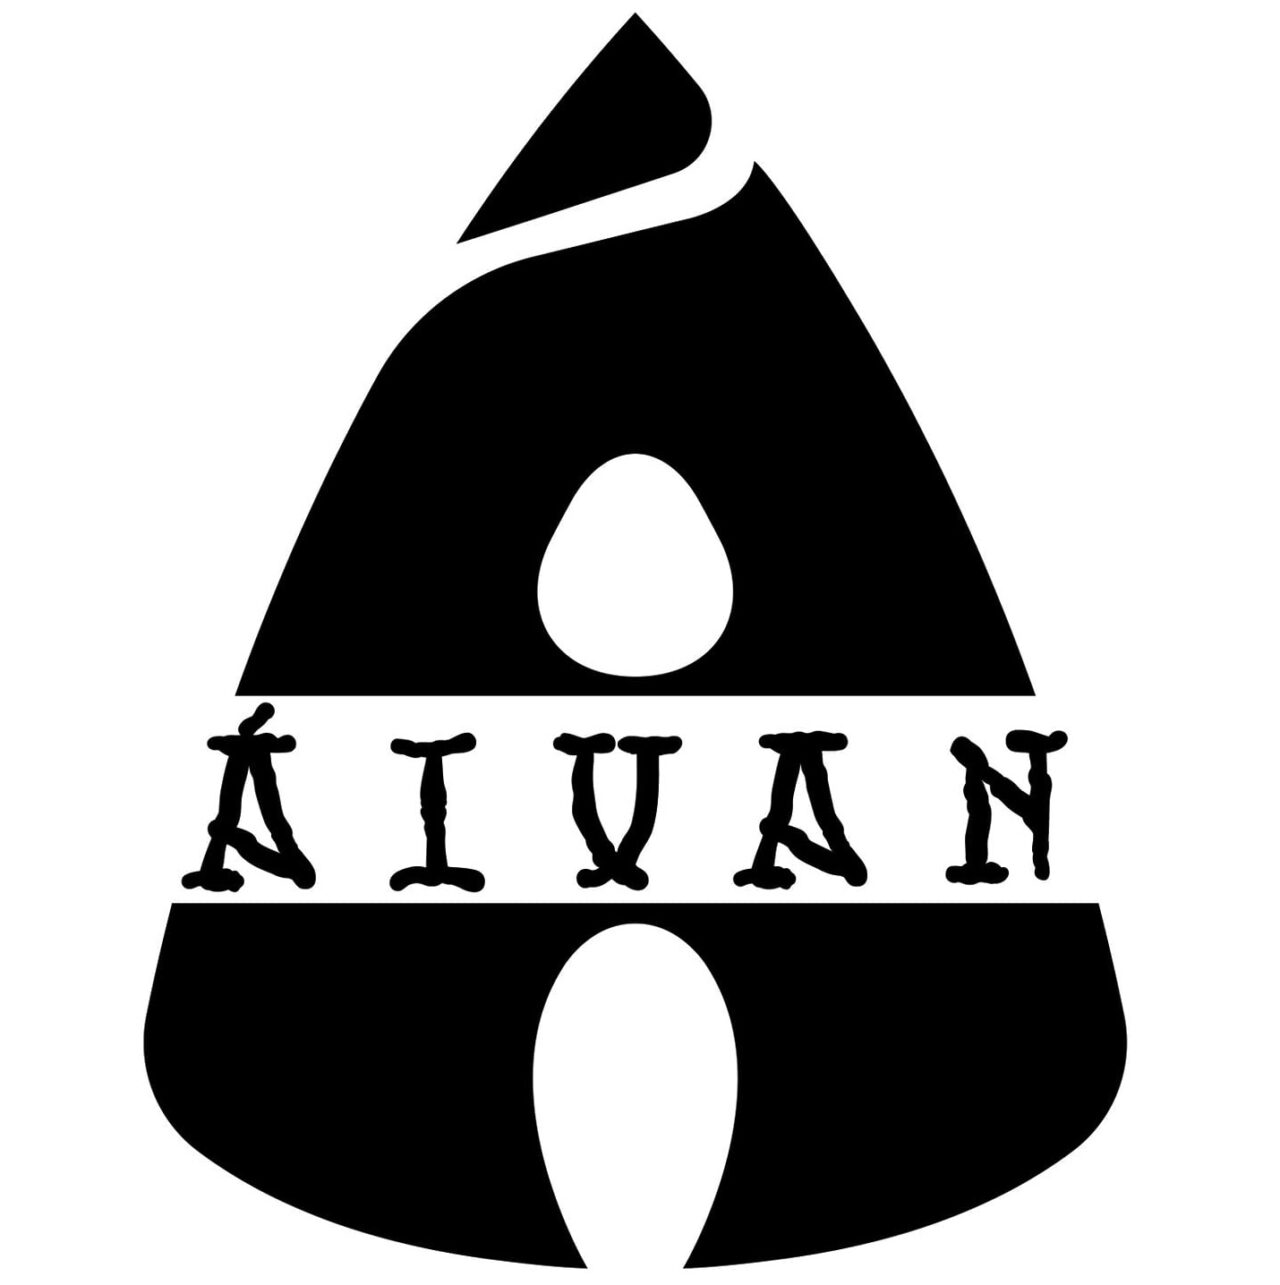 aivan-logo-1280x1285.jpg